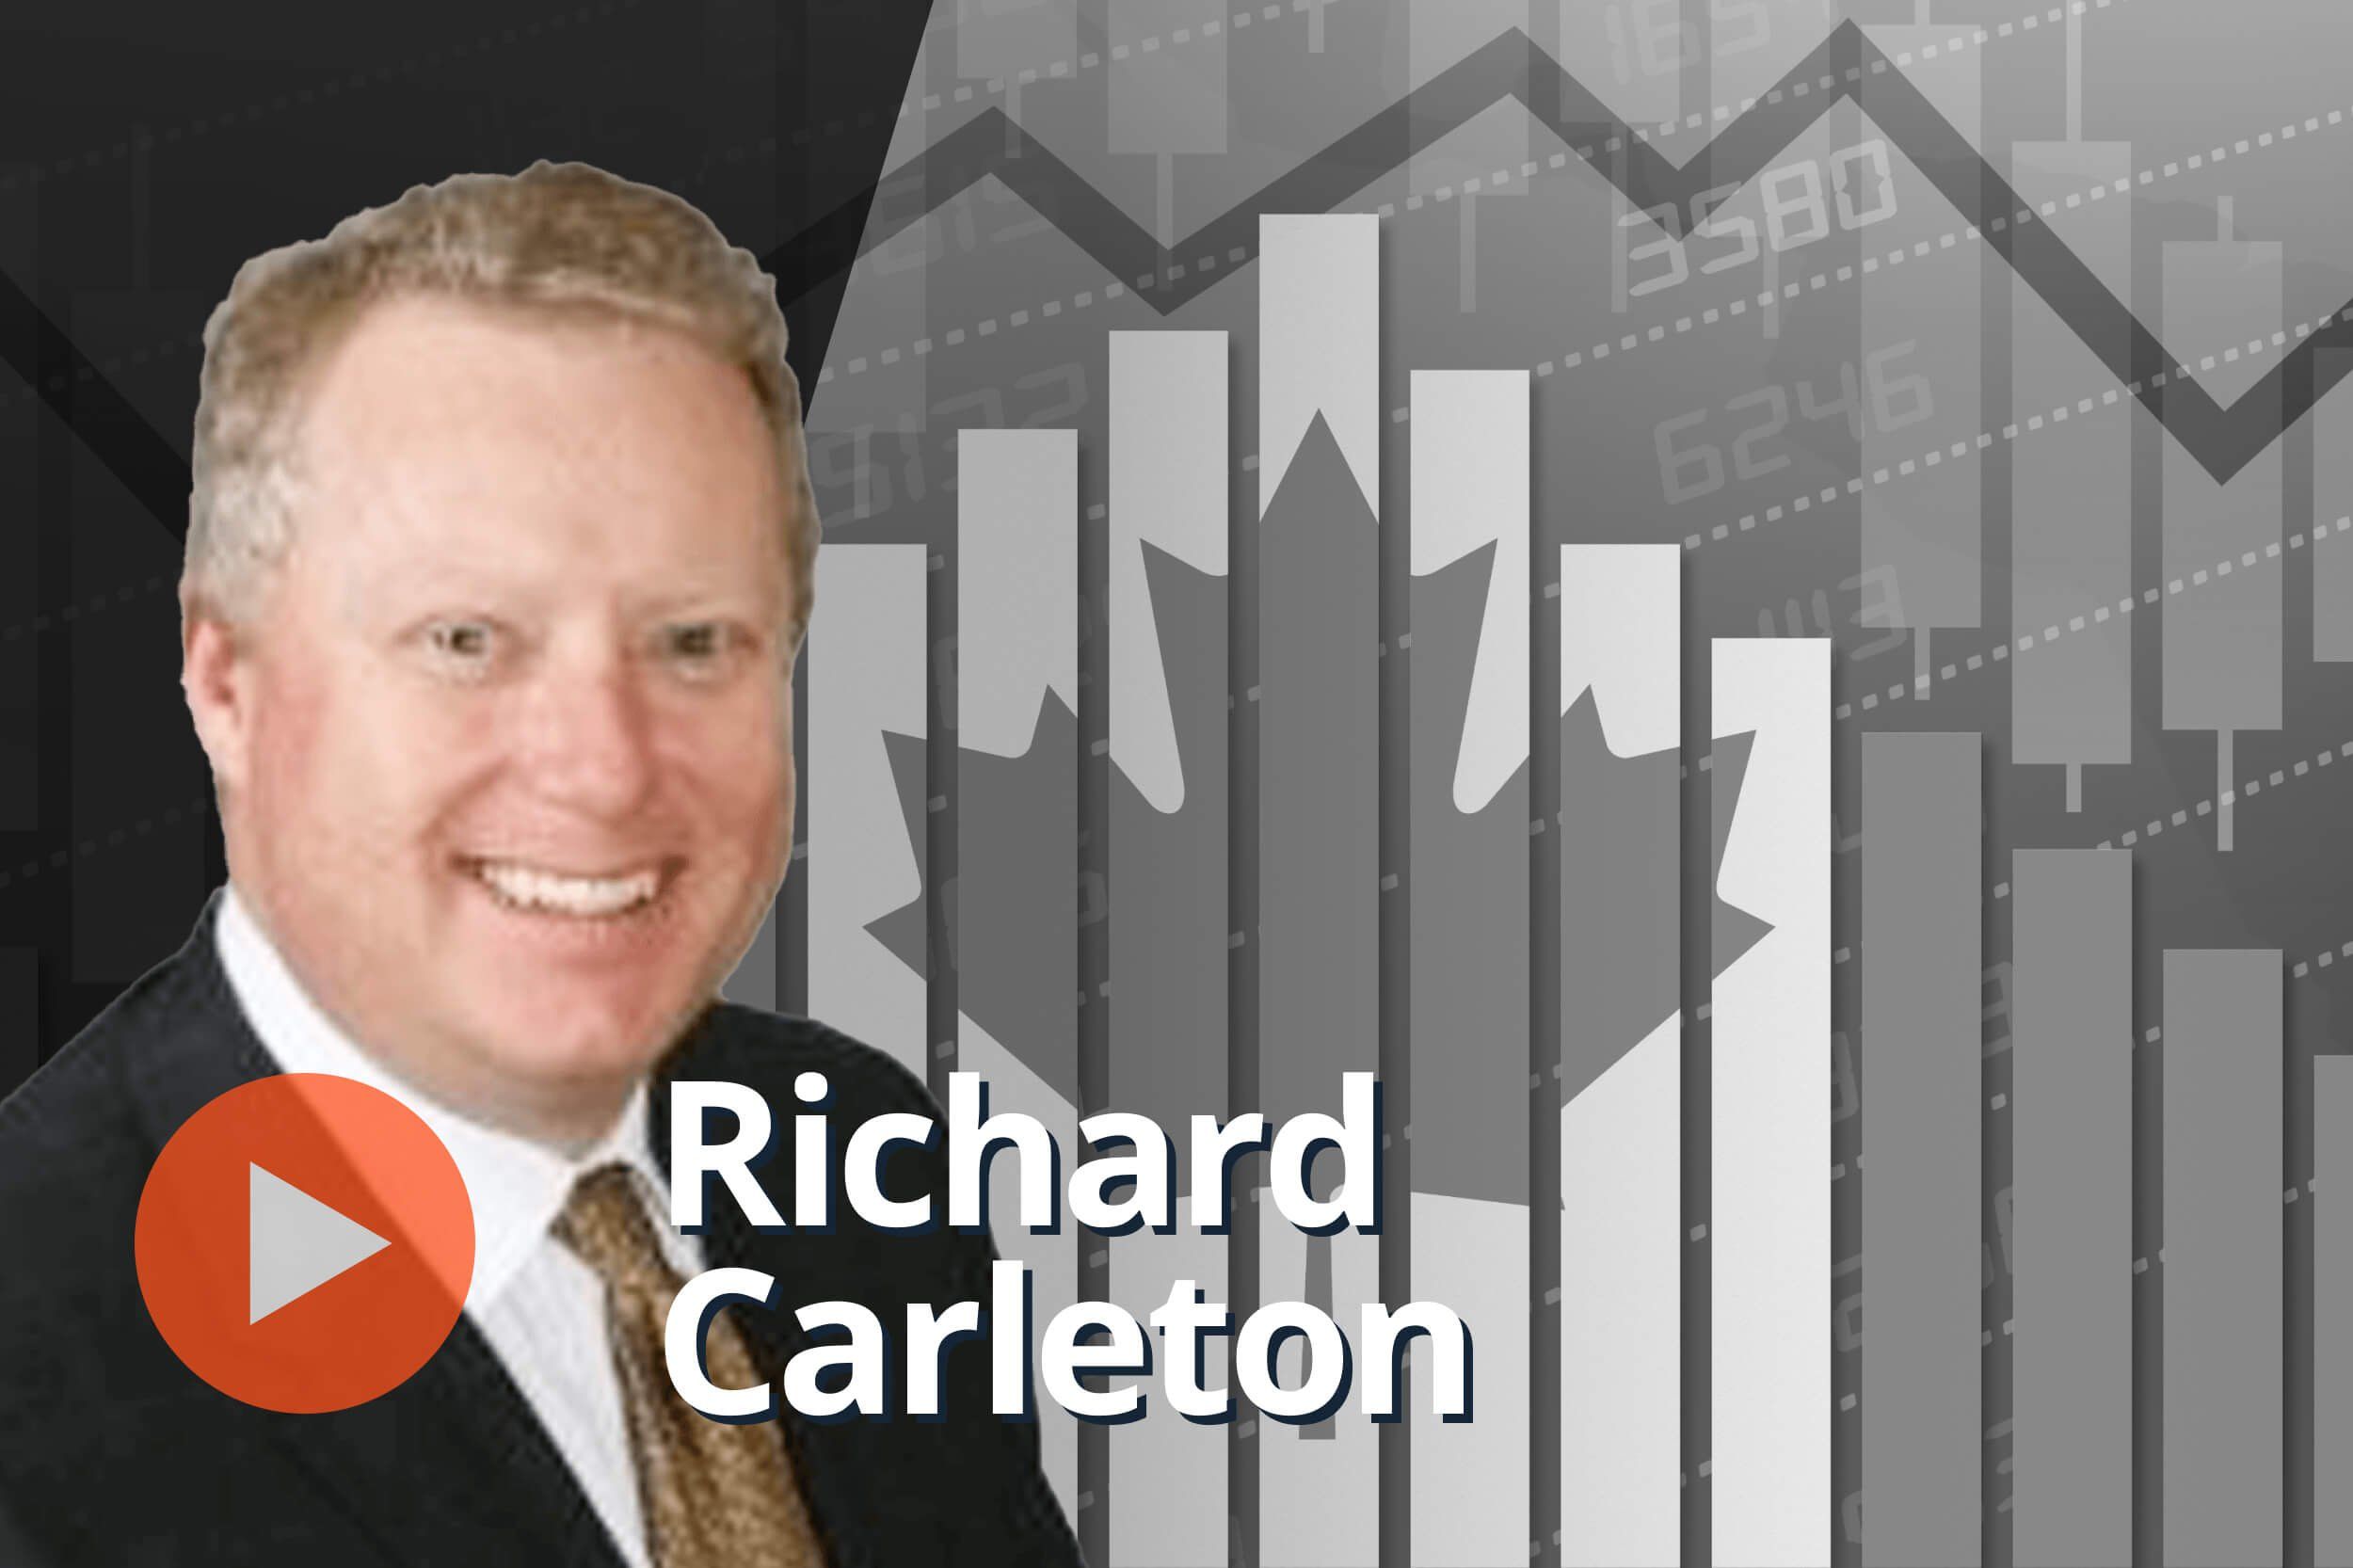 richard carleton, canada flag and stock chart